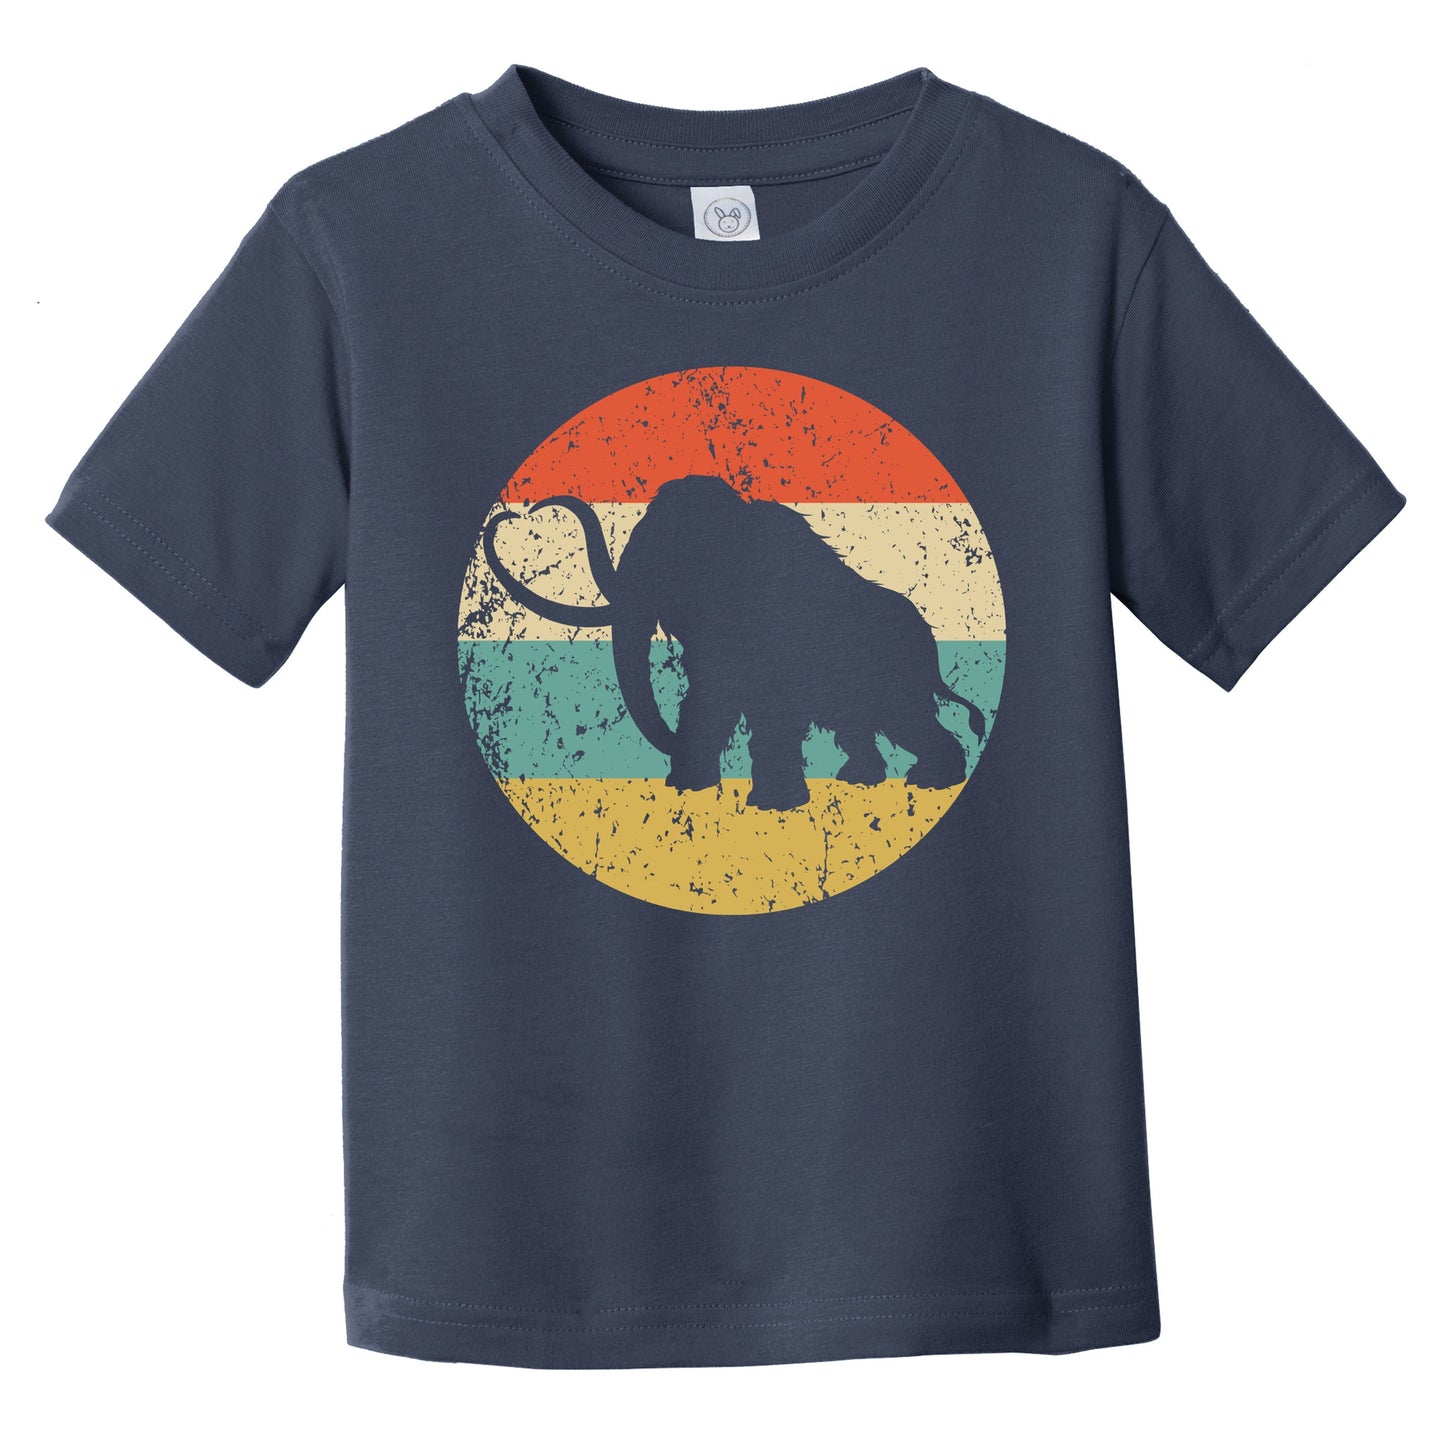 Woolly Mammoth Silhouette Retro Prehistoric Animal Infant Toddler T-Shirt